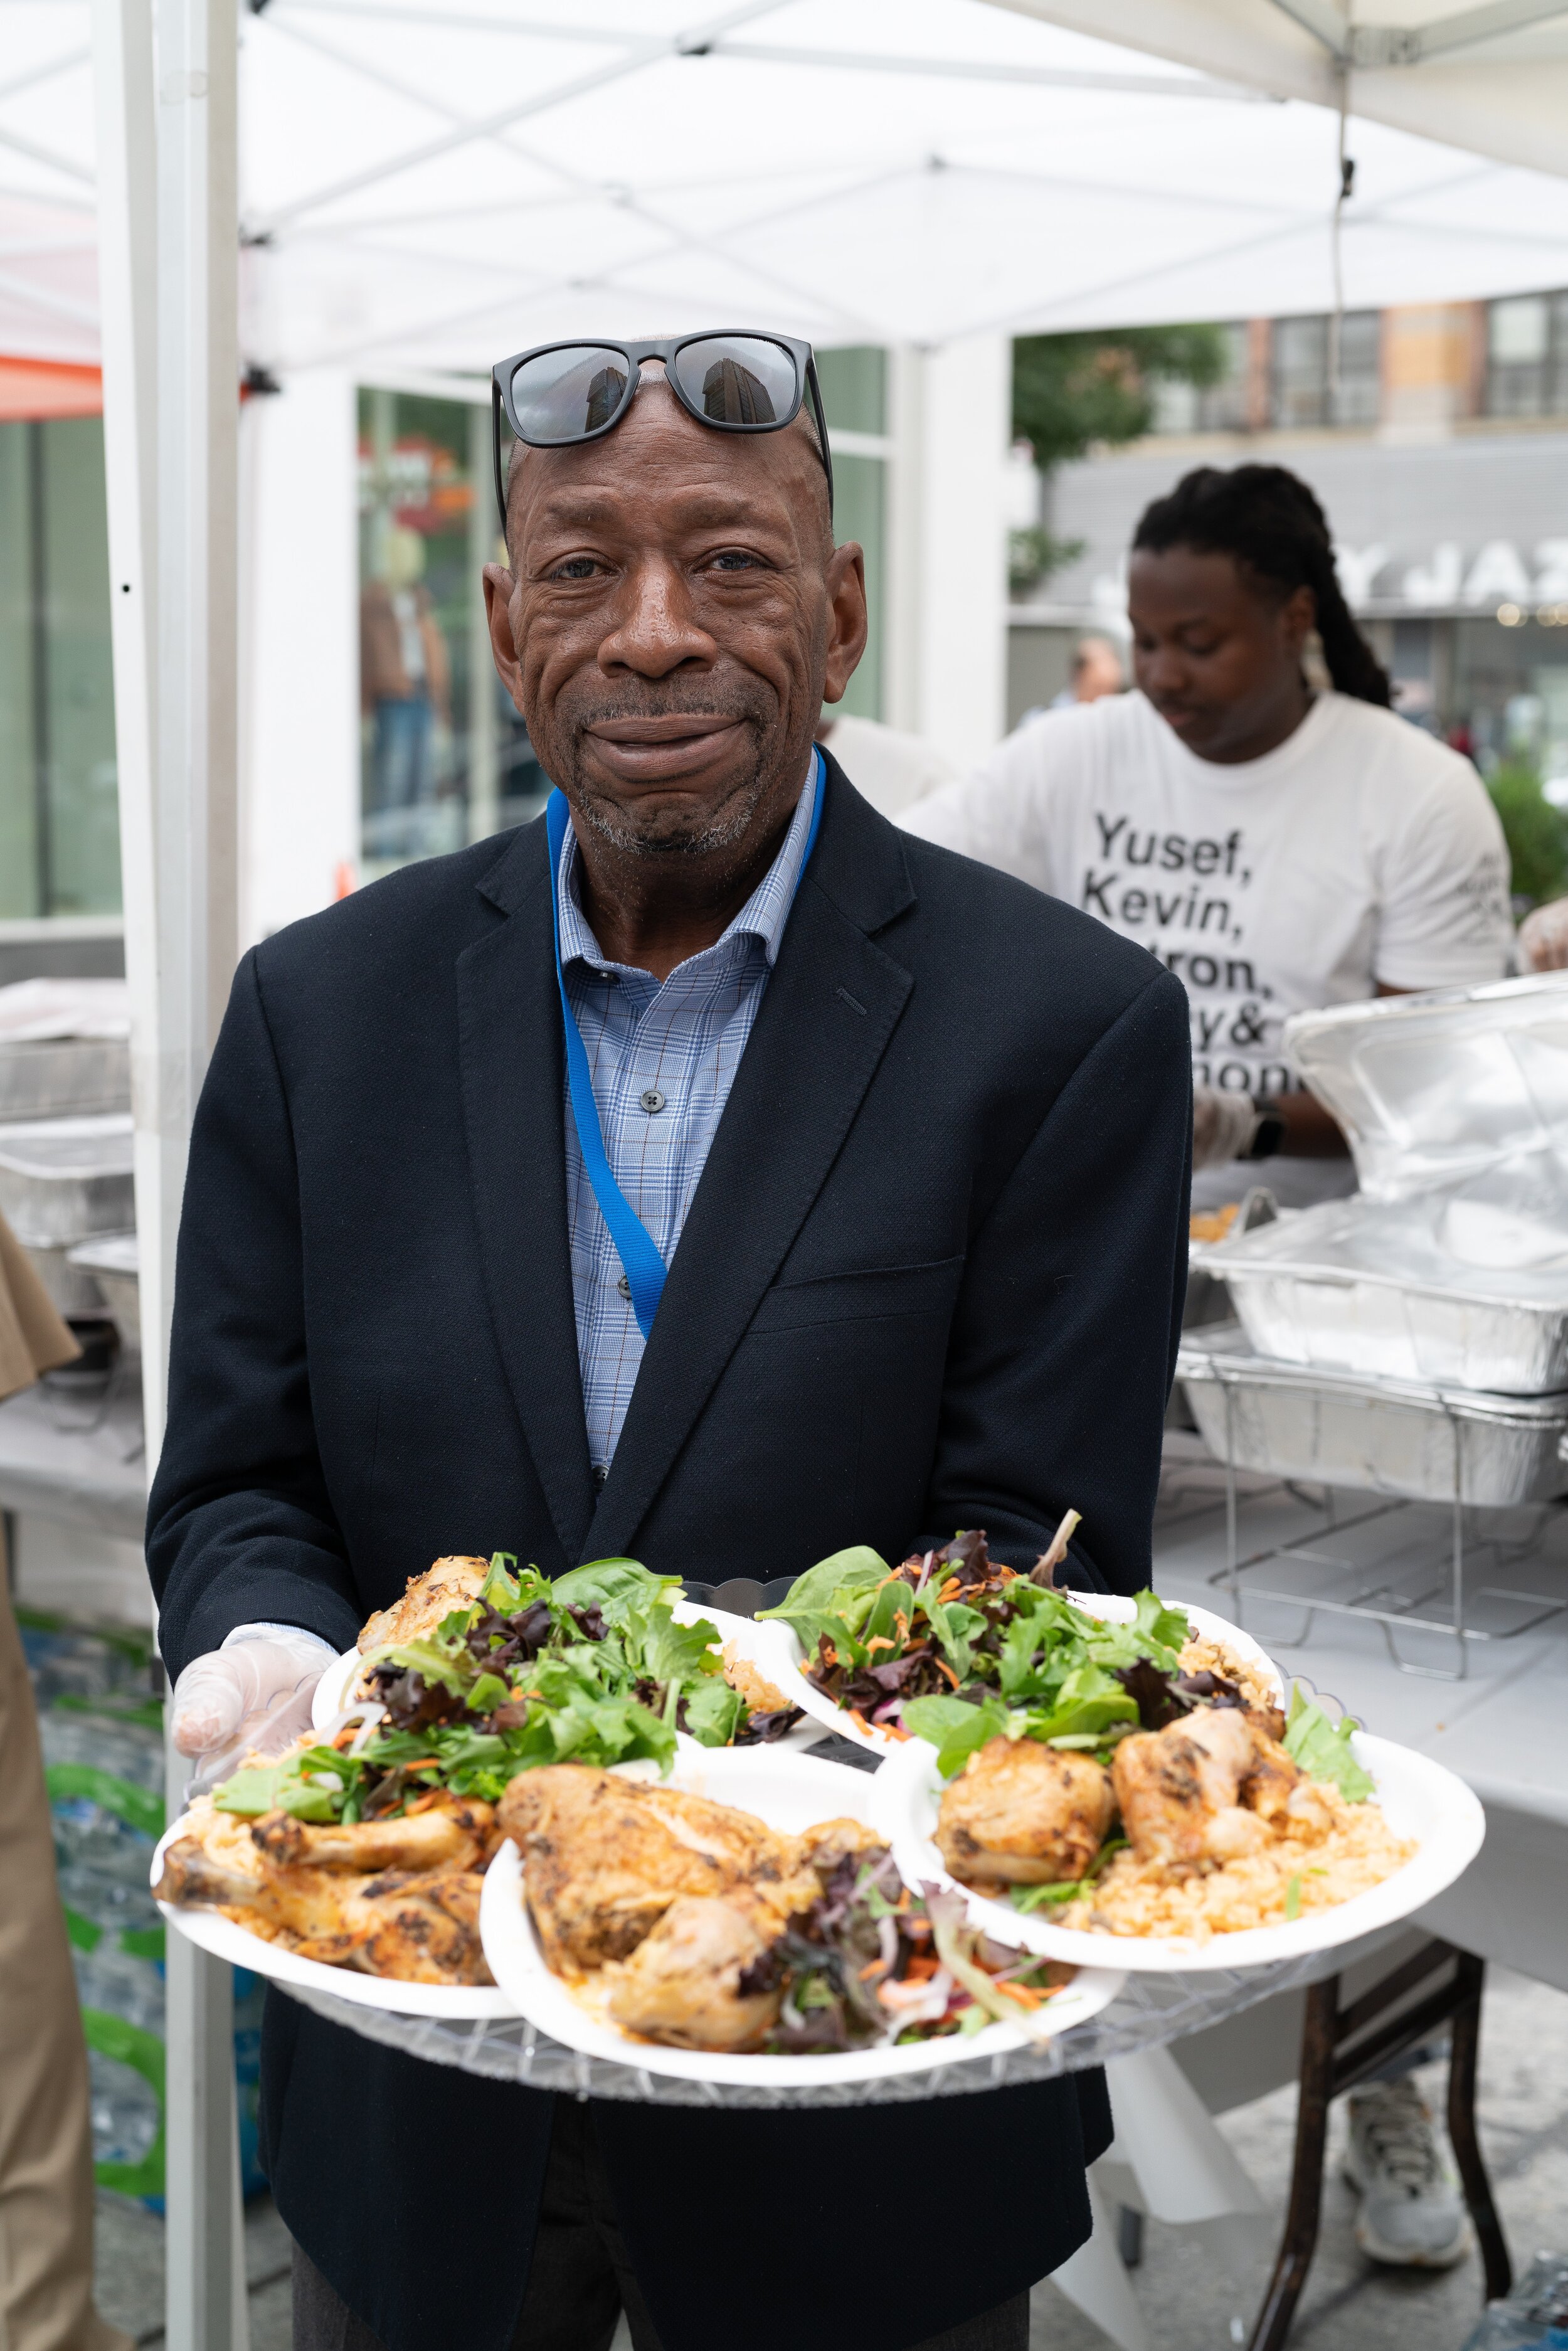   Charles Shorter, a Ryan Health employee serves lunch at Harlem's Senior Day.  